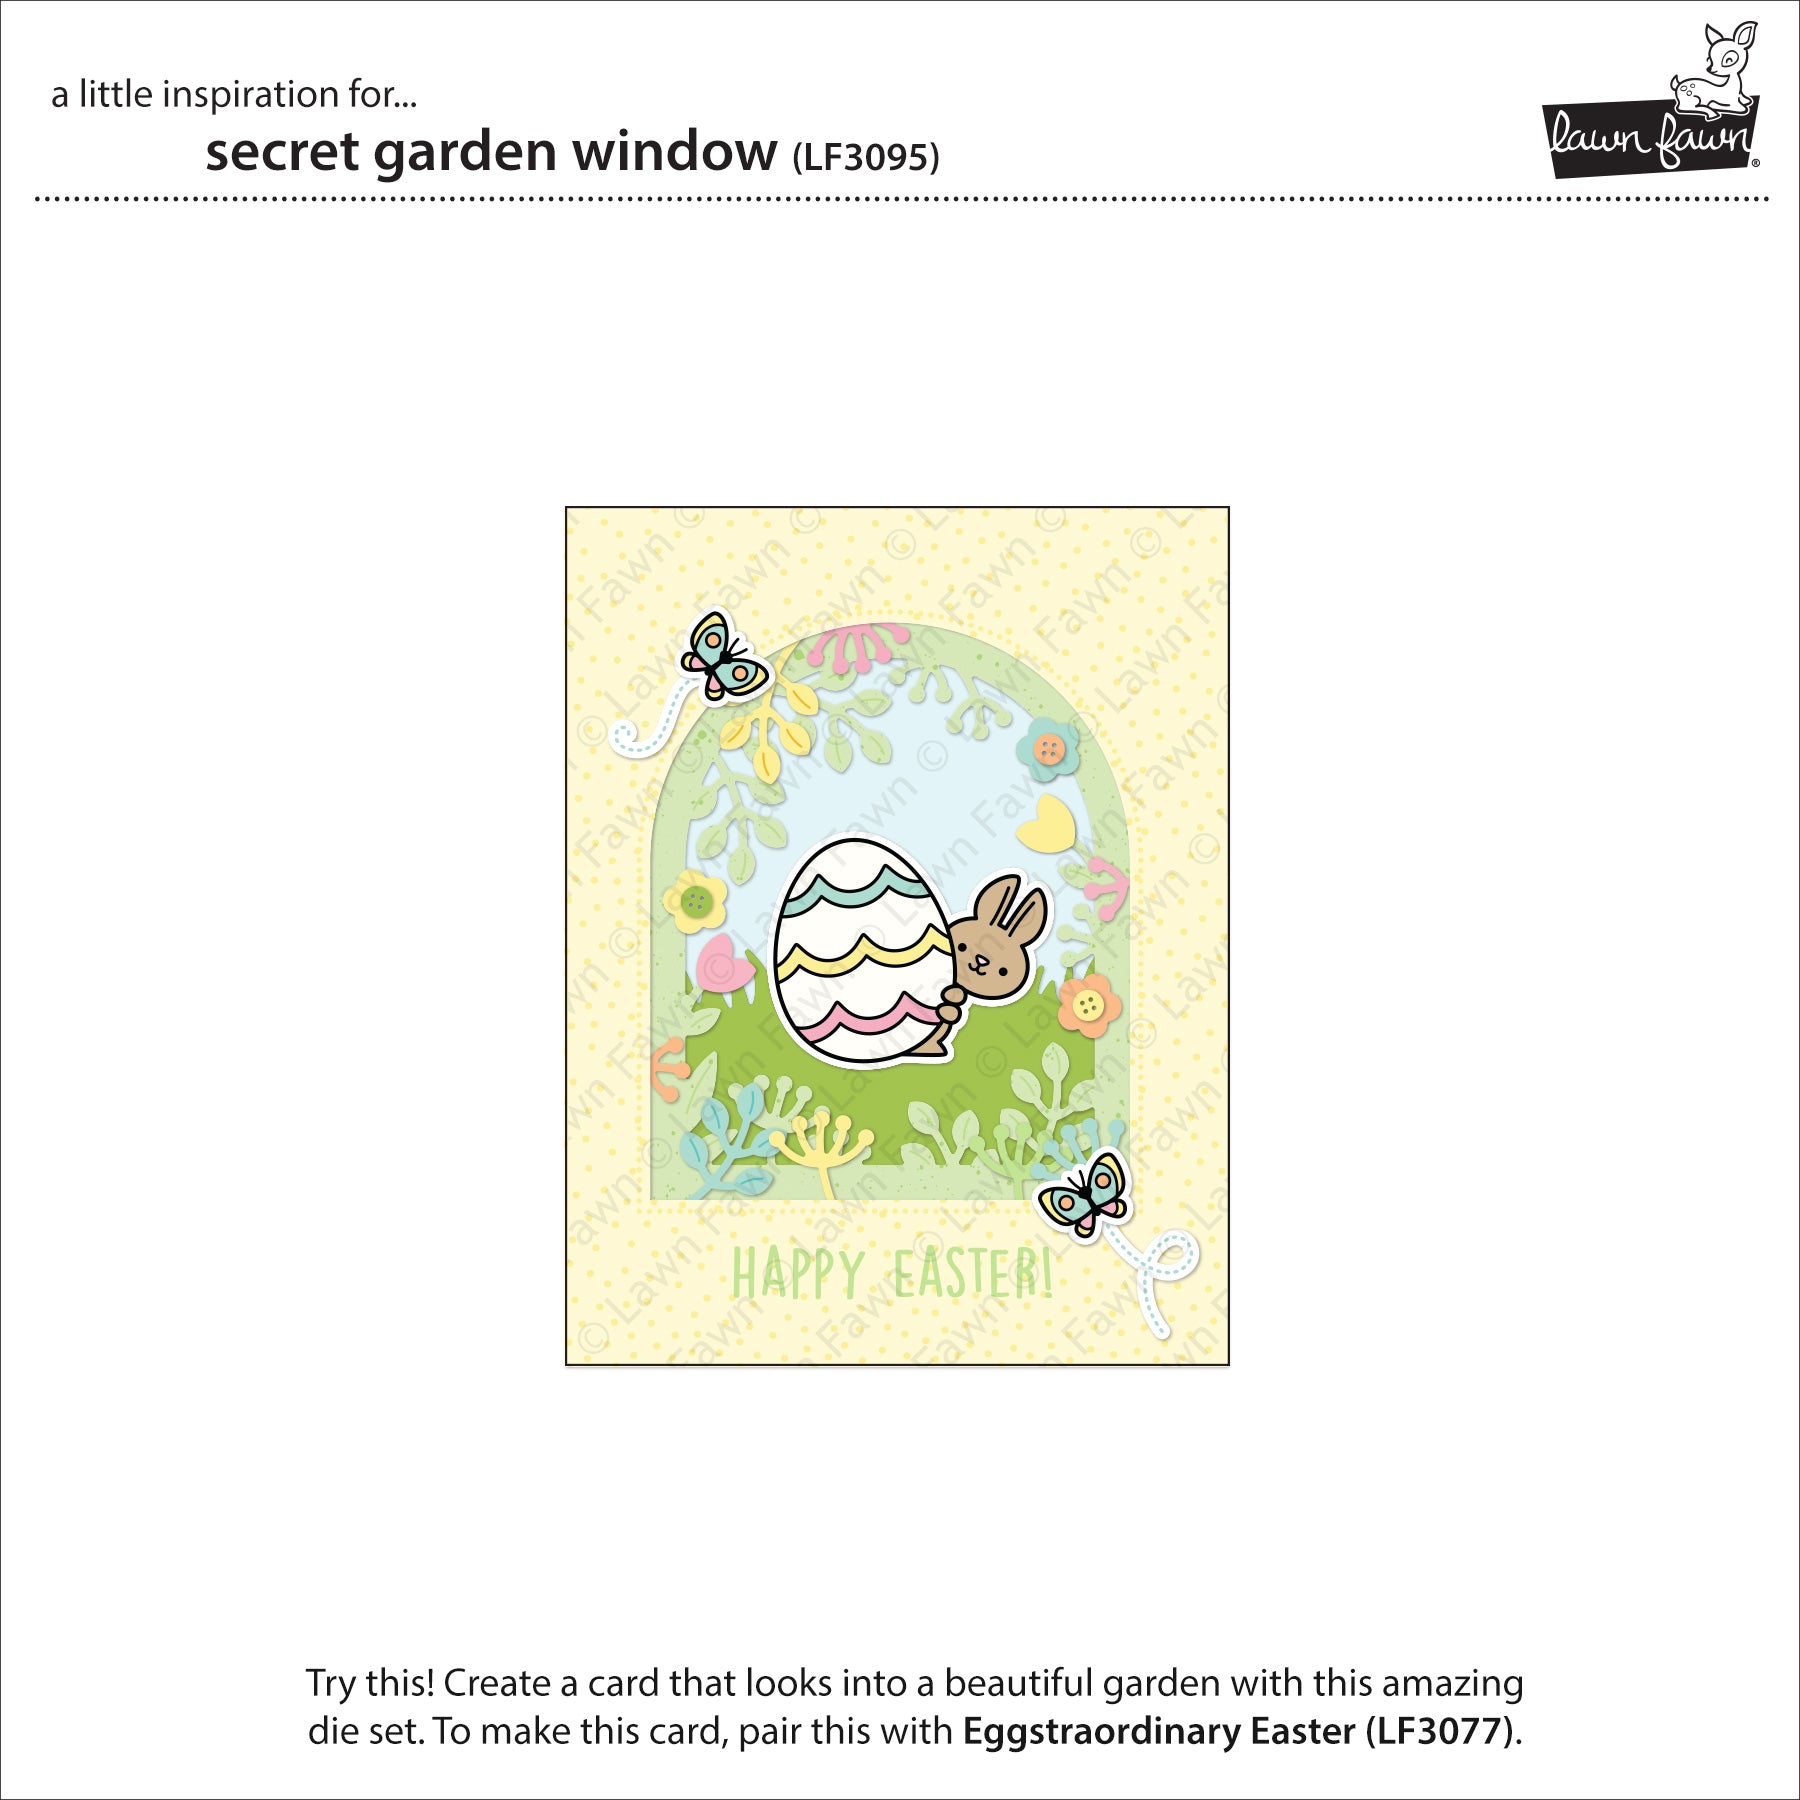 secret garden window